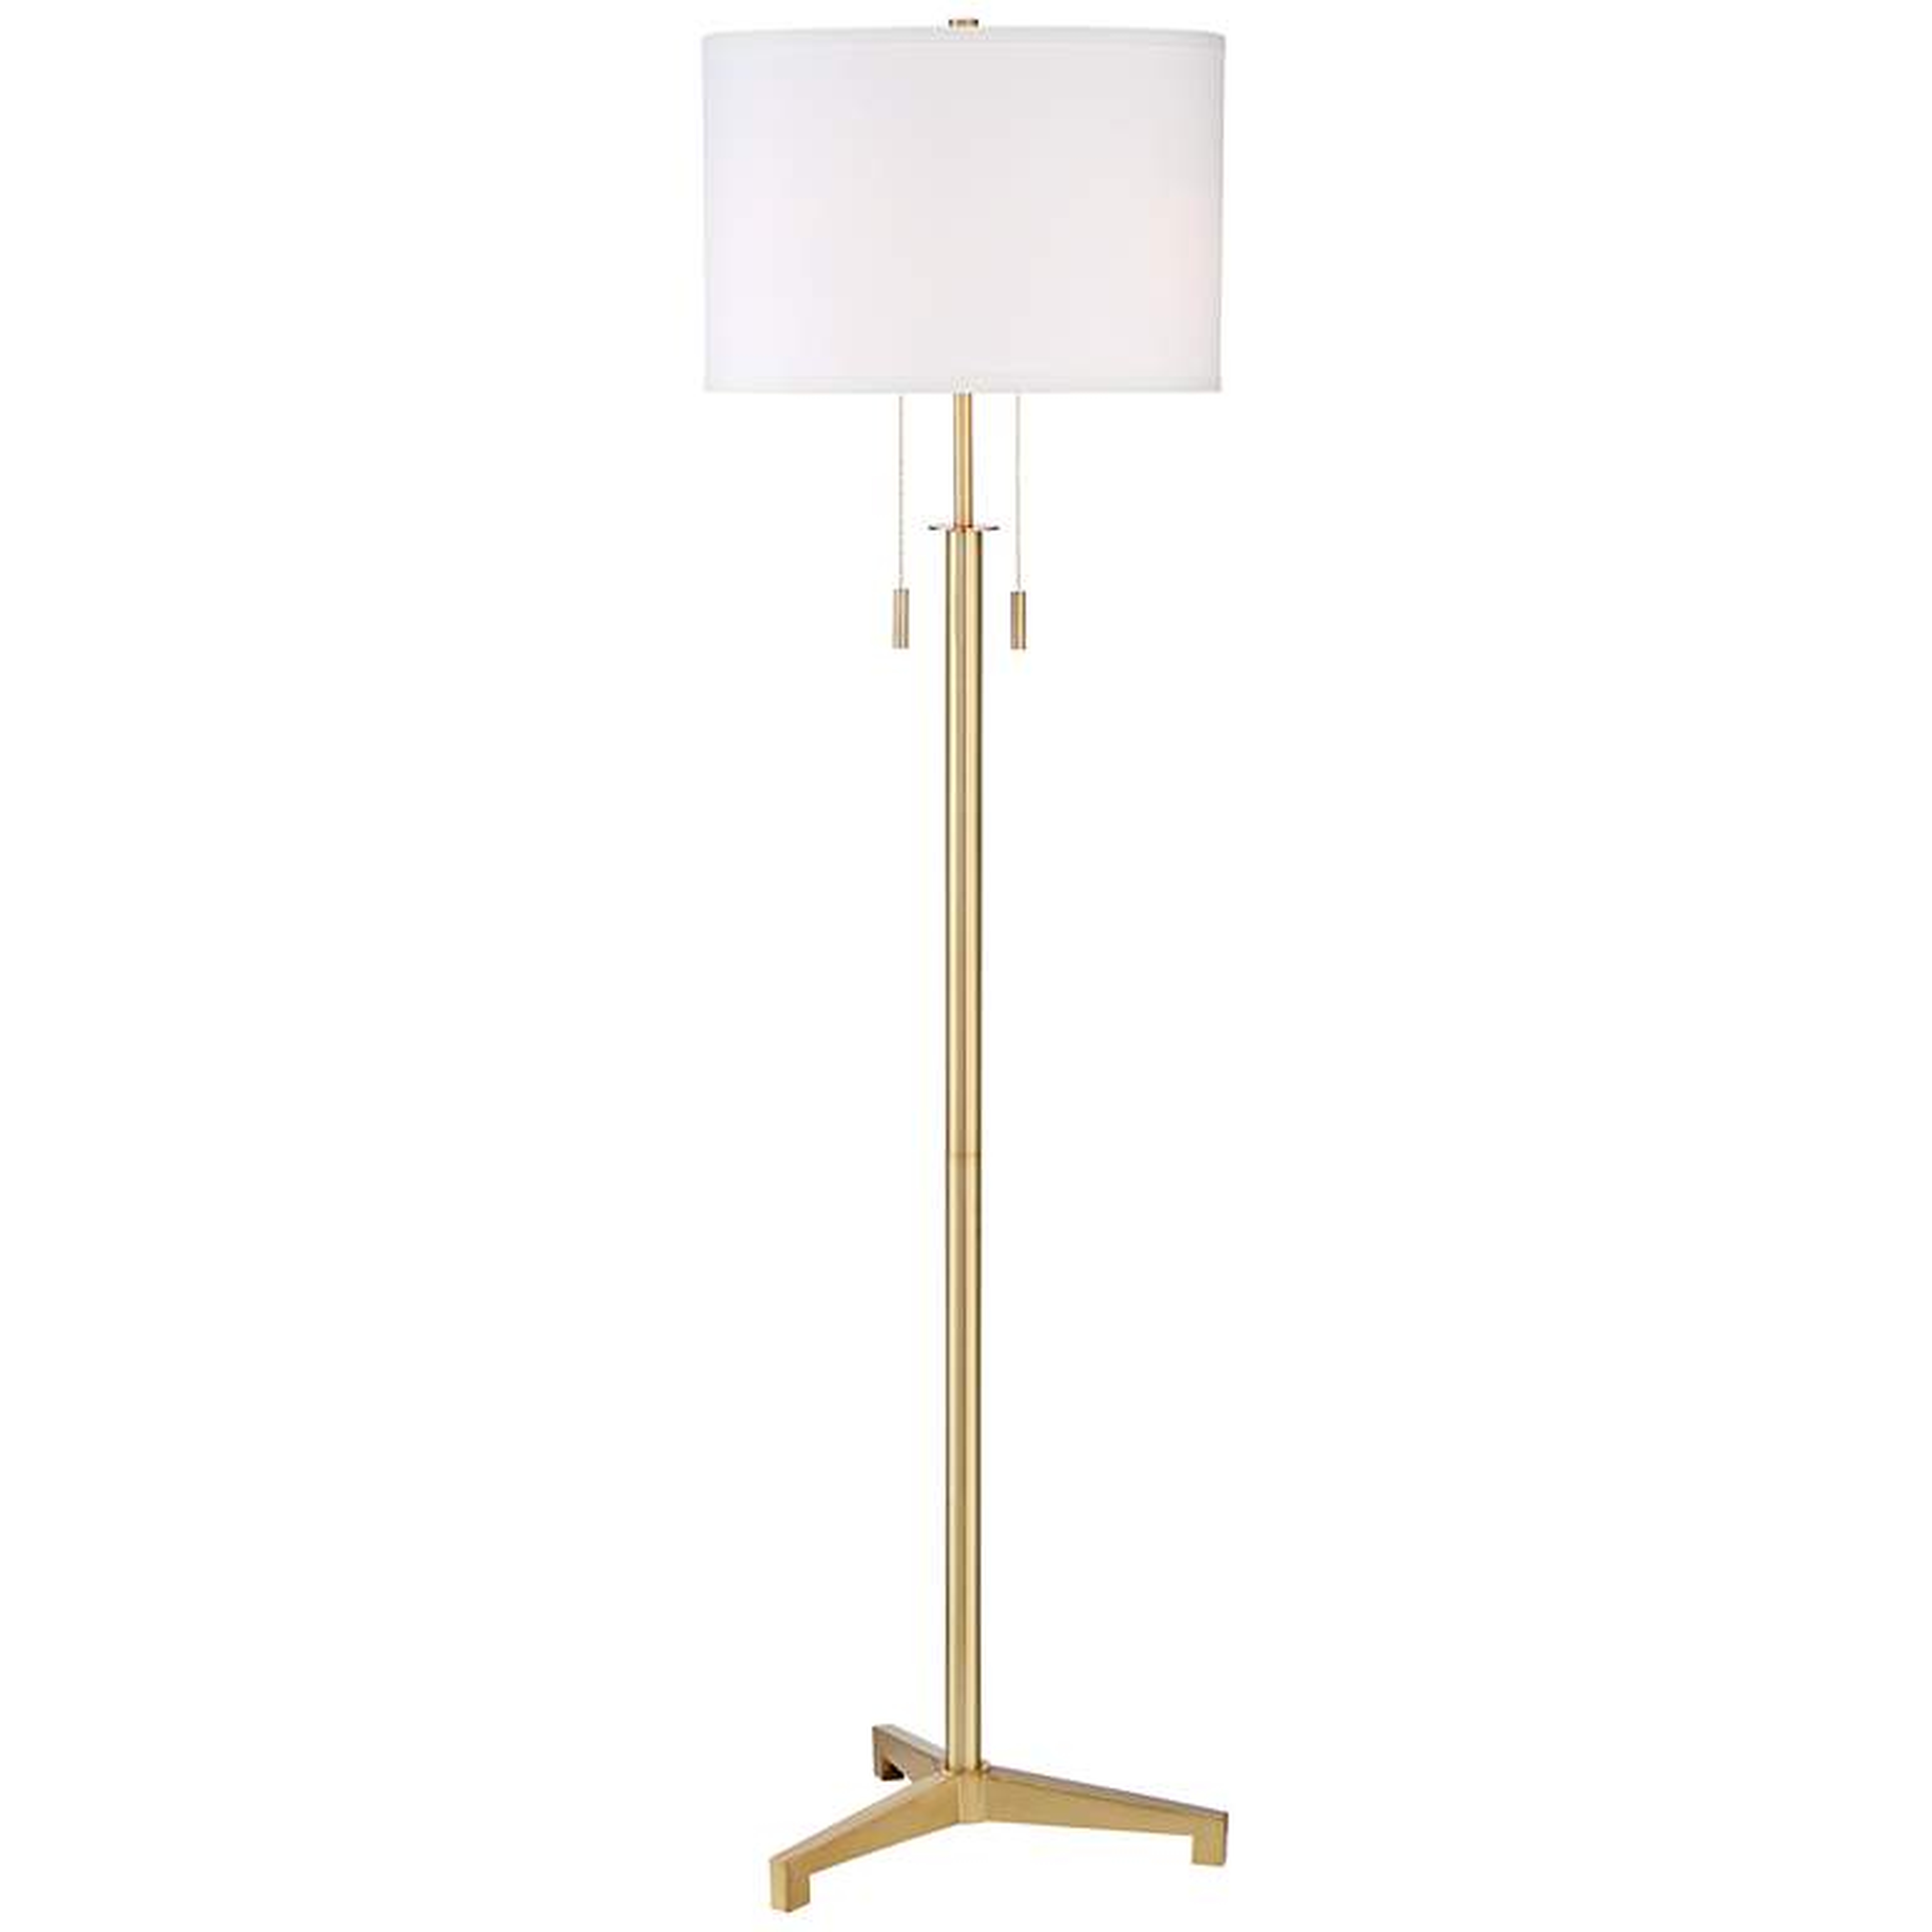 Possini Euro Encino Antique Brass Tripod Floor Lamp - Style # 33D09 - Lamps Plus